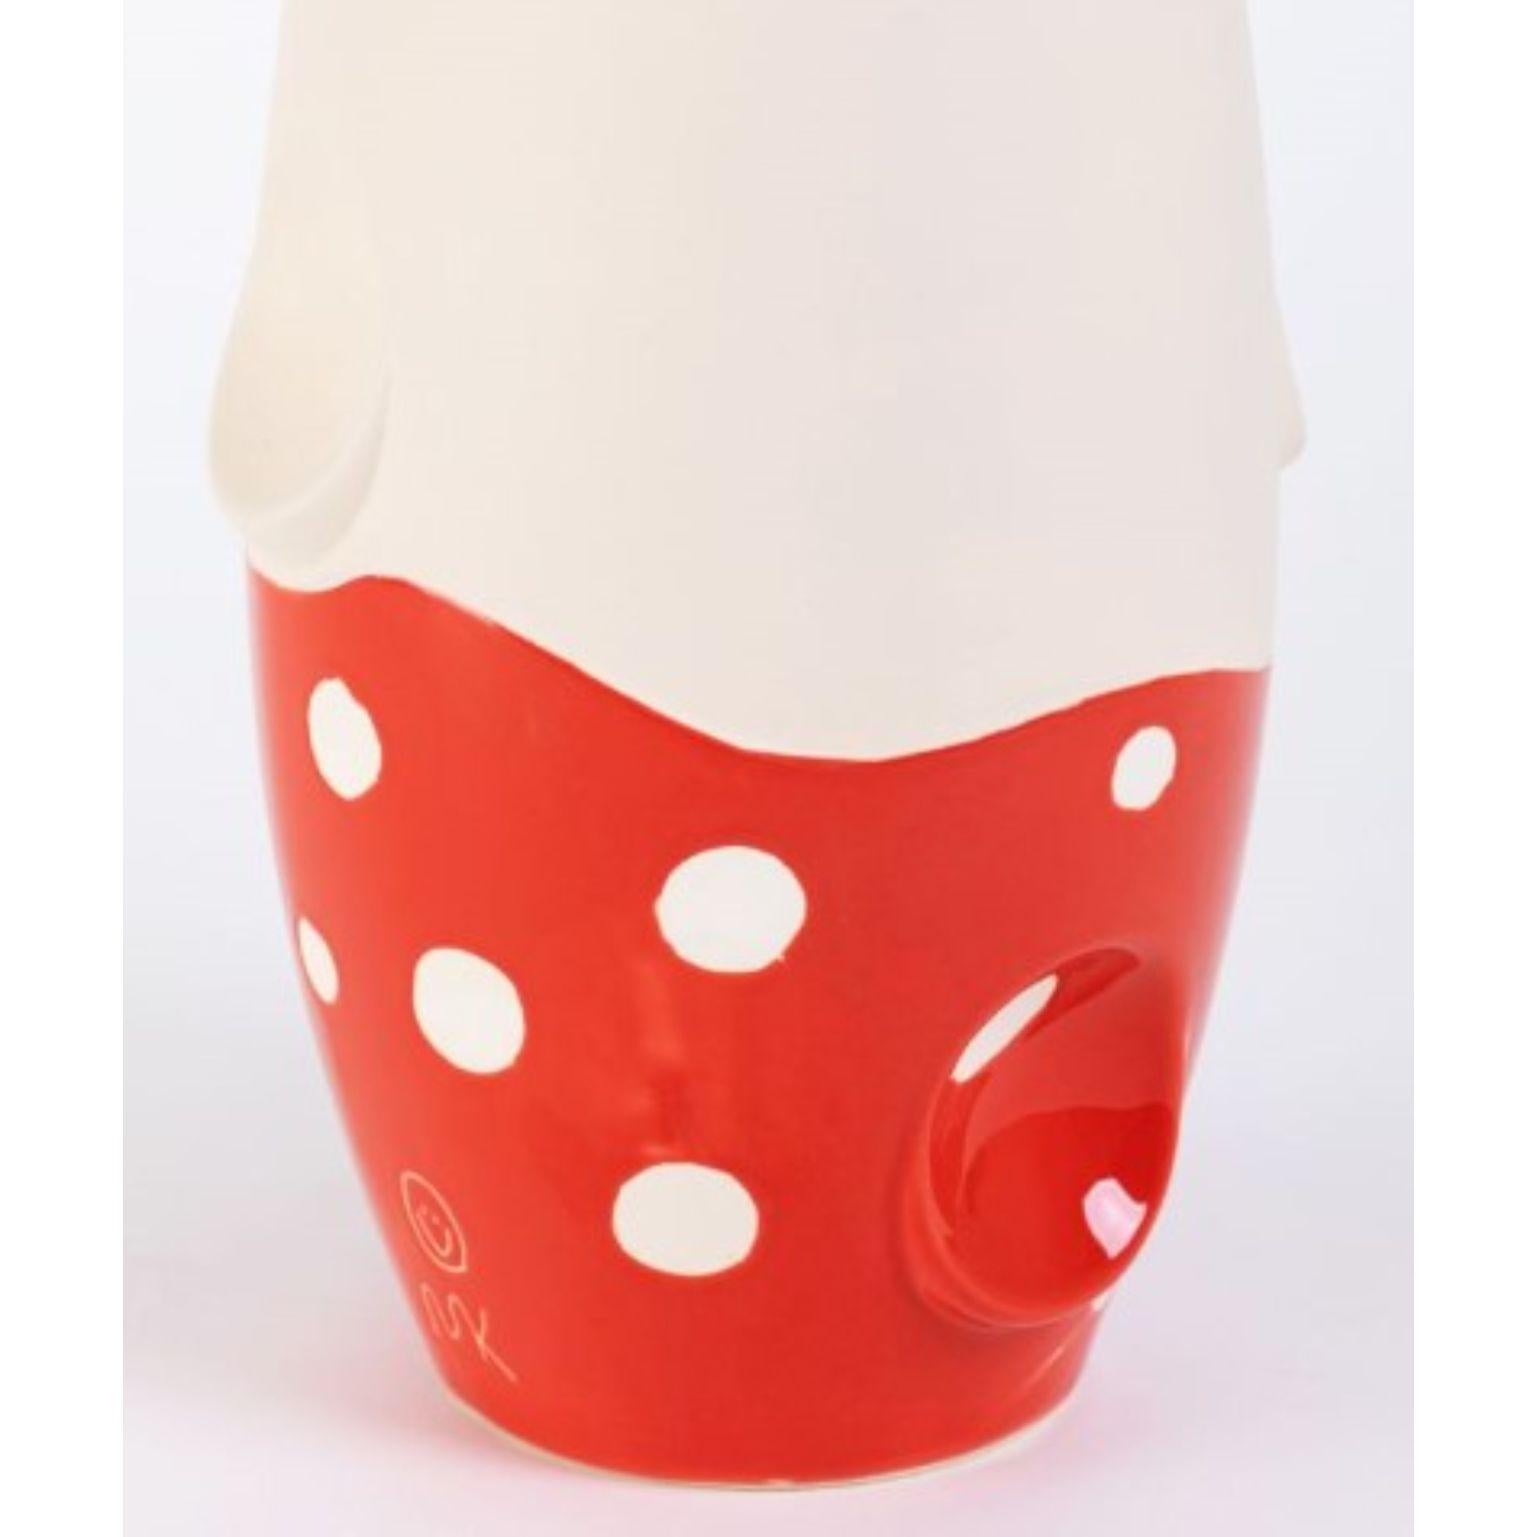 Polish Oko Pop Ceramic Vase, Mushroom by Malwina Konopacka